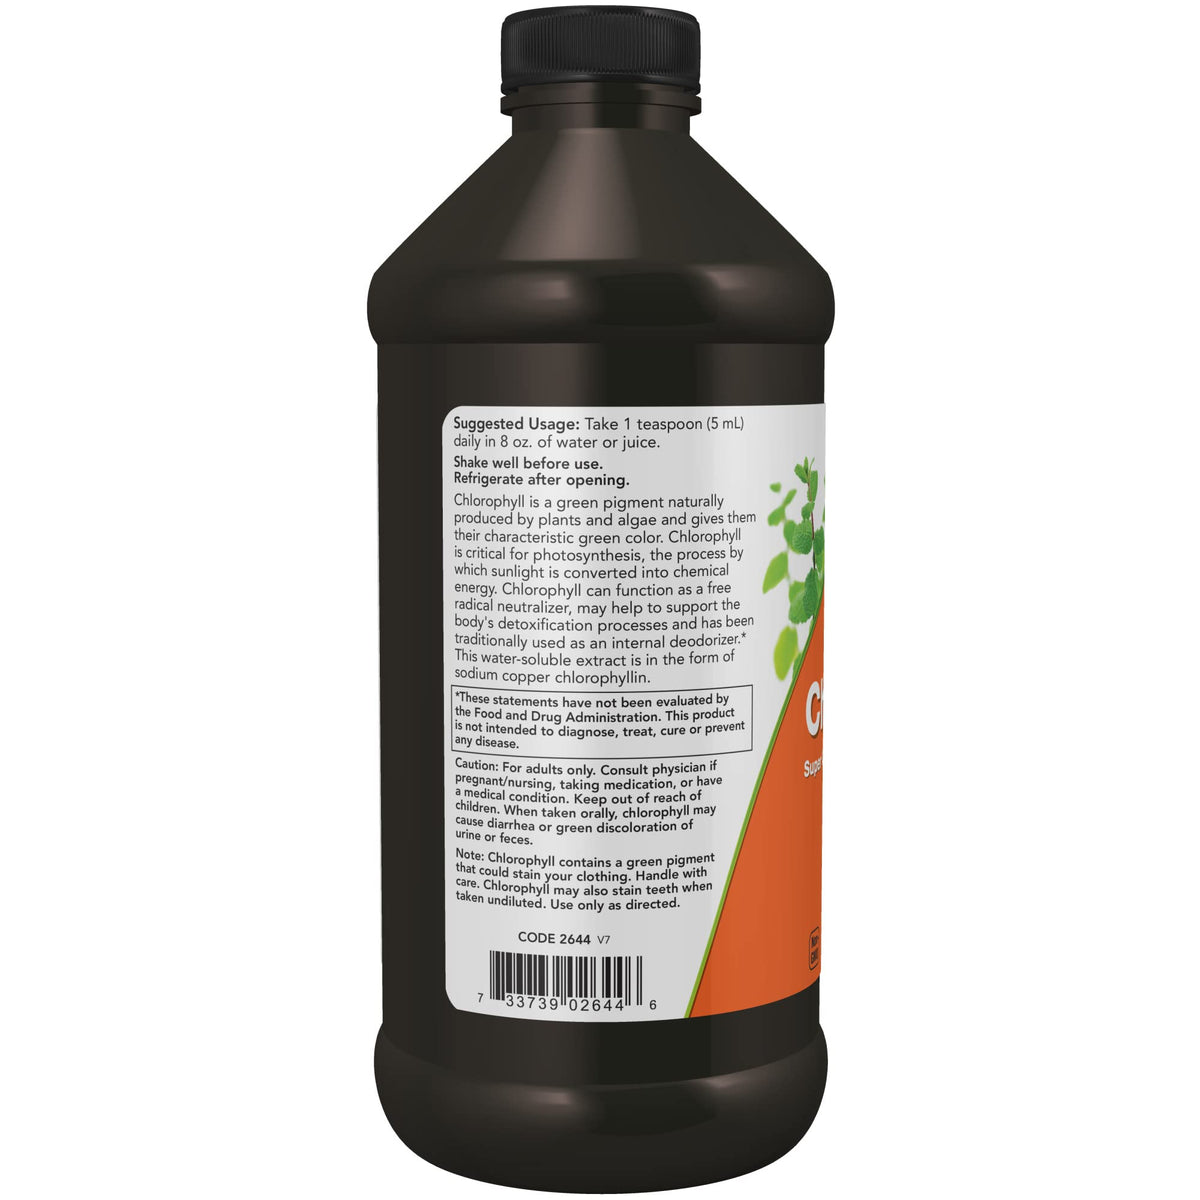 NOW Liquid Chorophyll Internal Deodorizer - Mint Flavour 473ml